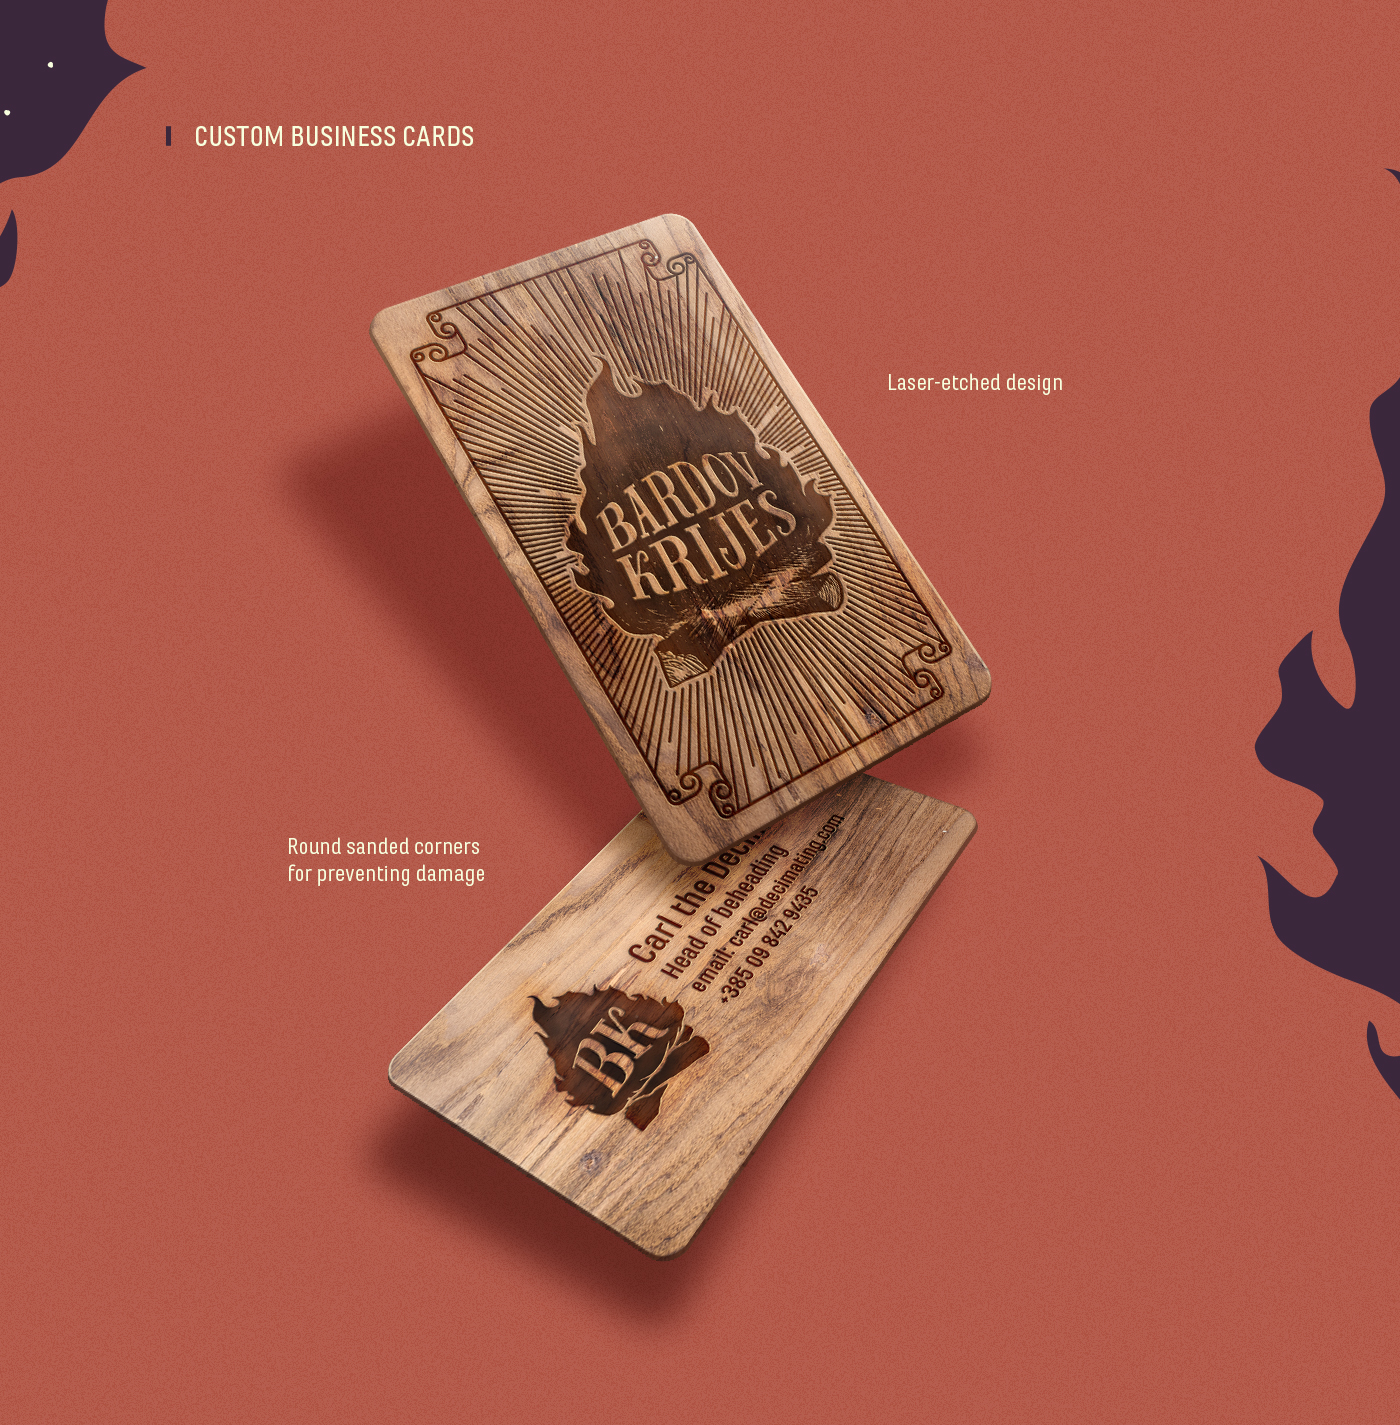 logo design fantasy convention branding  business card LARP Magic   illustrated Hipster